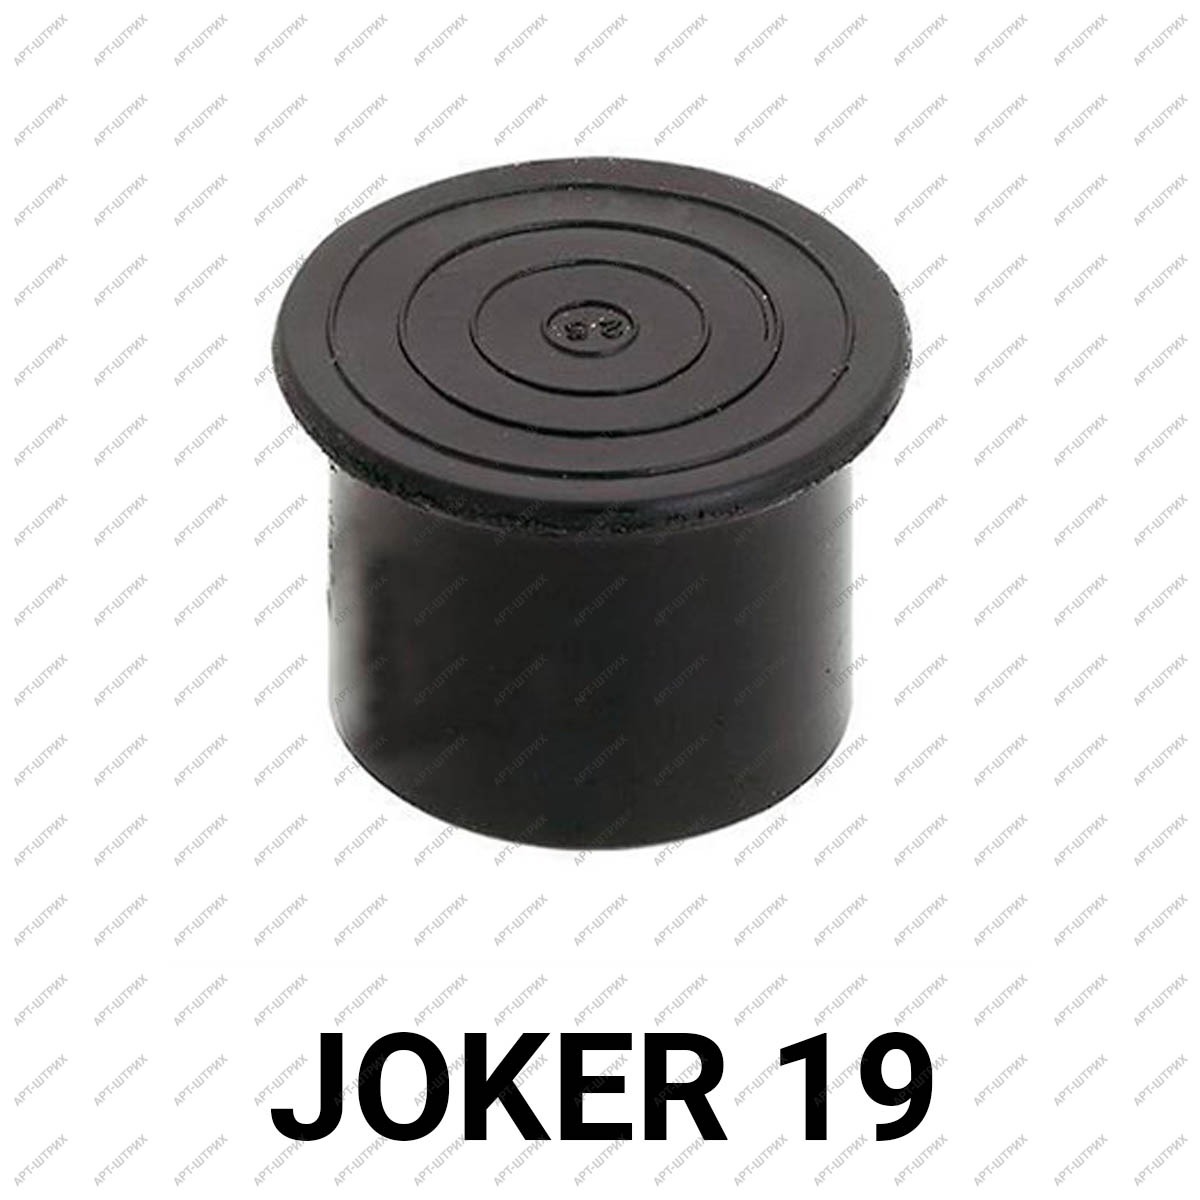 Joker 19 Ножка пластиковая внешняя (Заглушка)